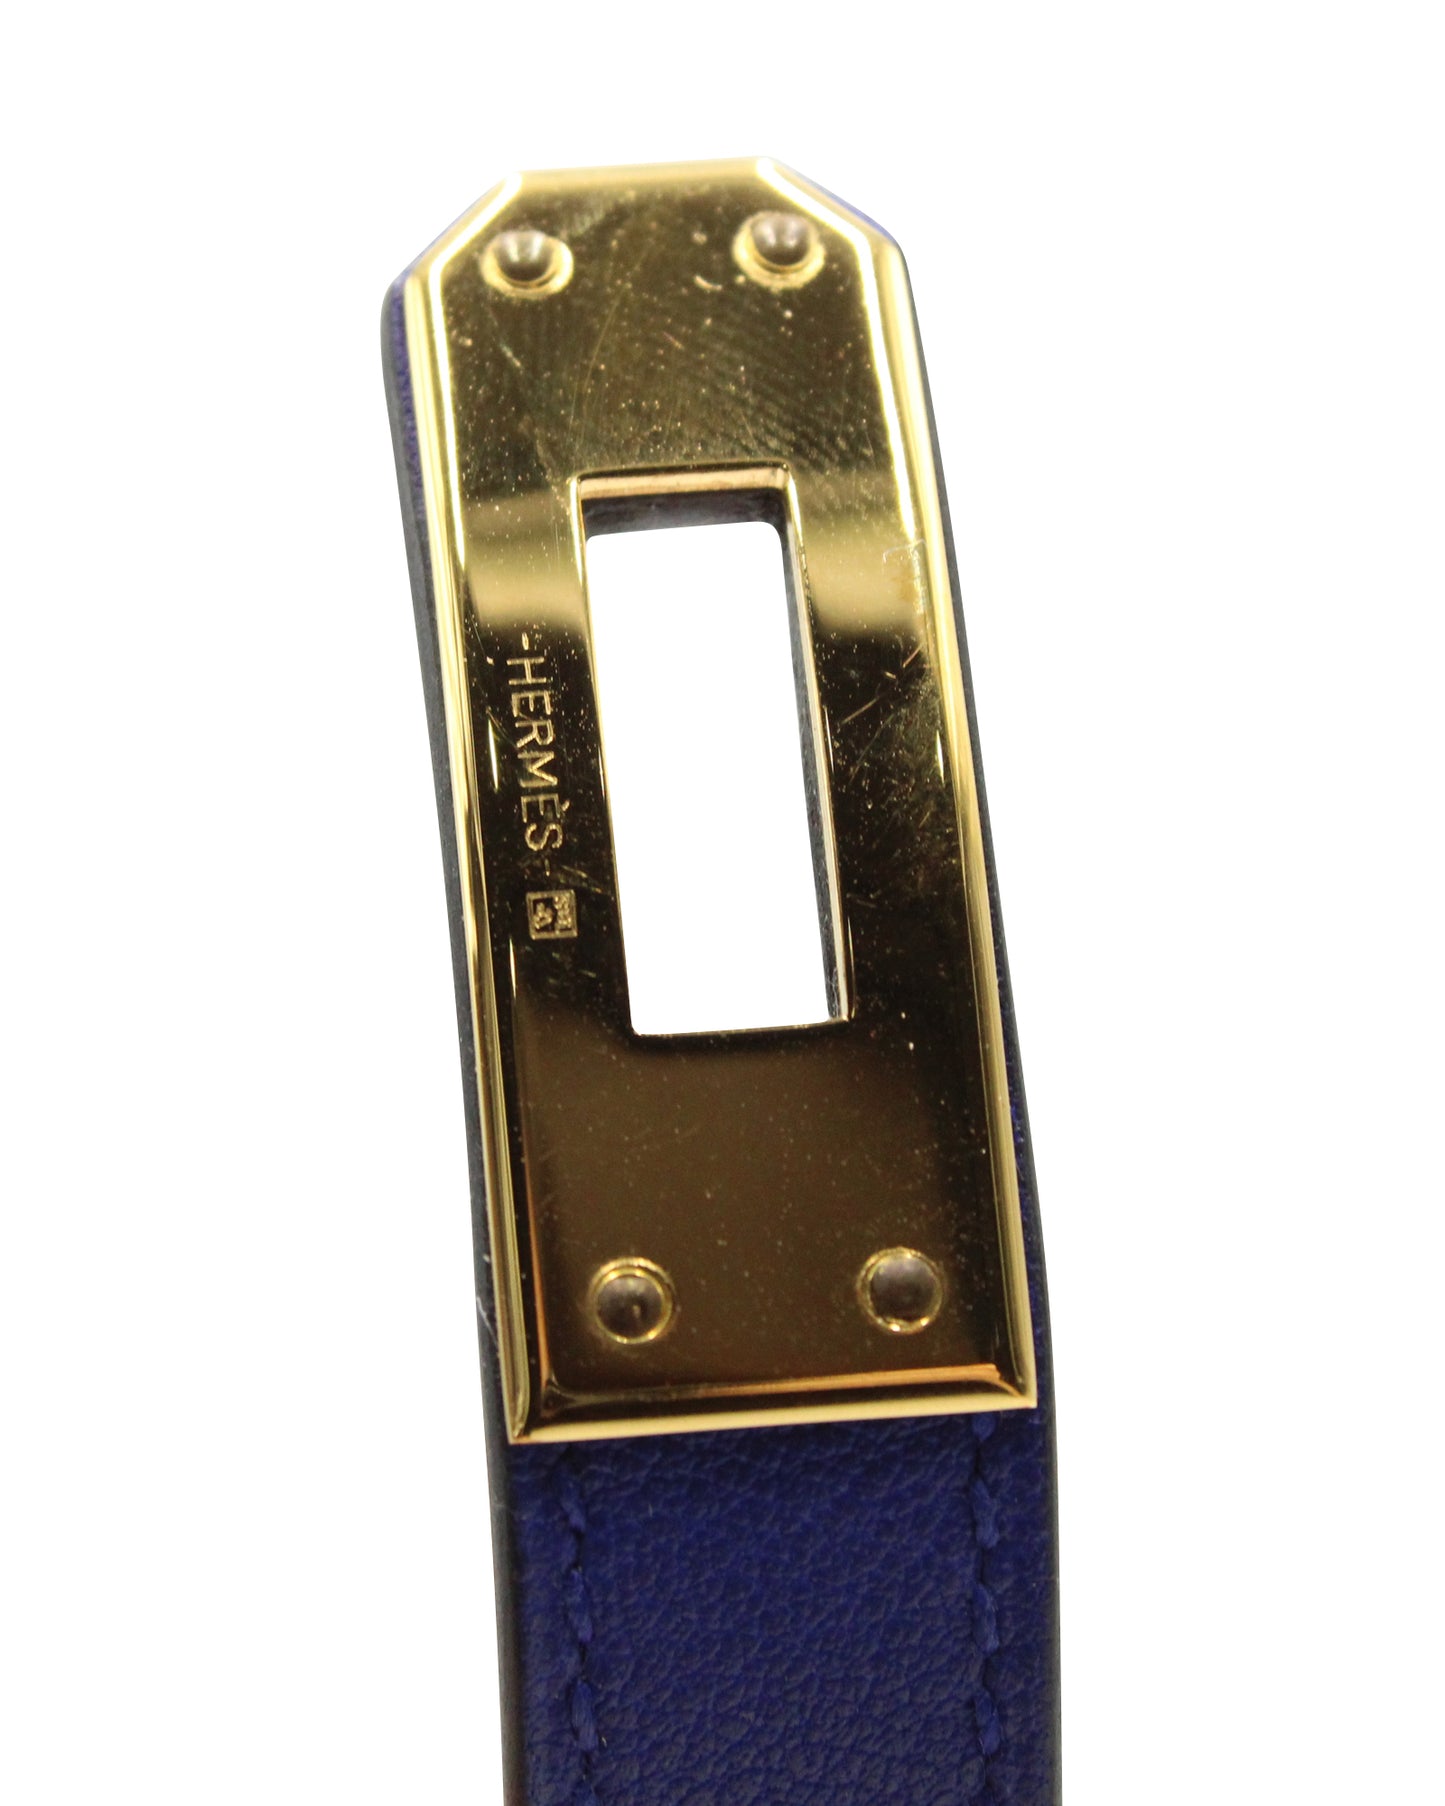 HERMÈS Kelly Double Tour Bracelet In Bleu Saphir With Gold Hardware